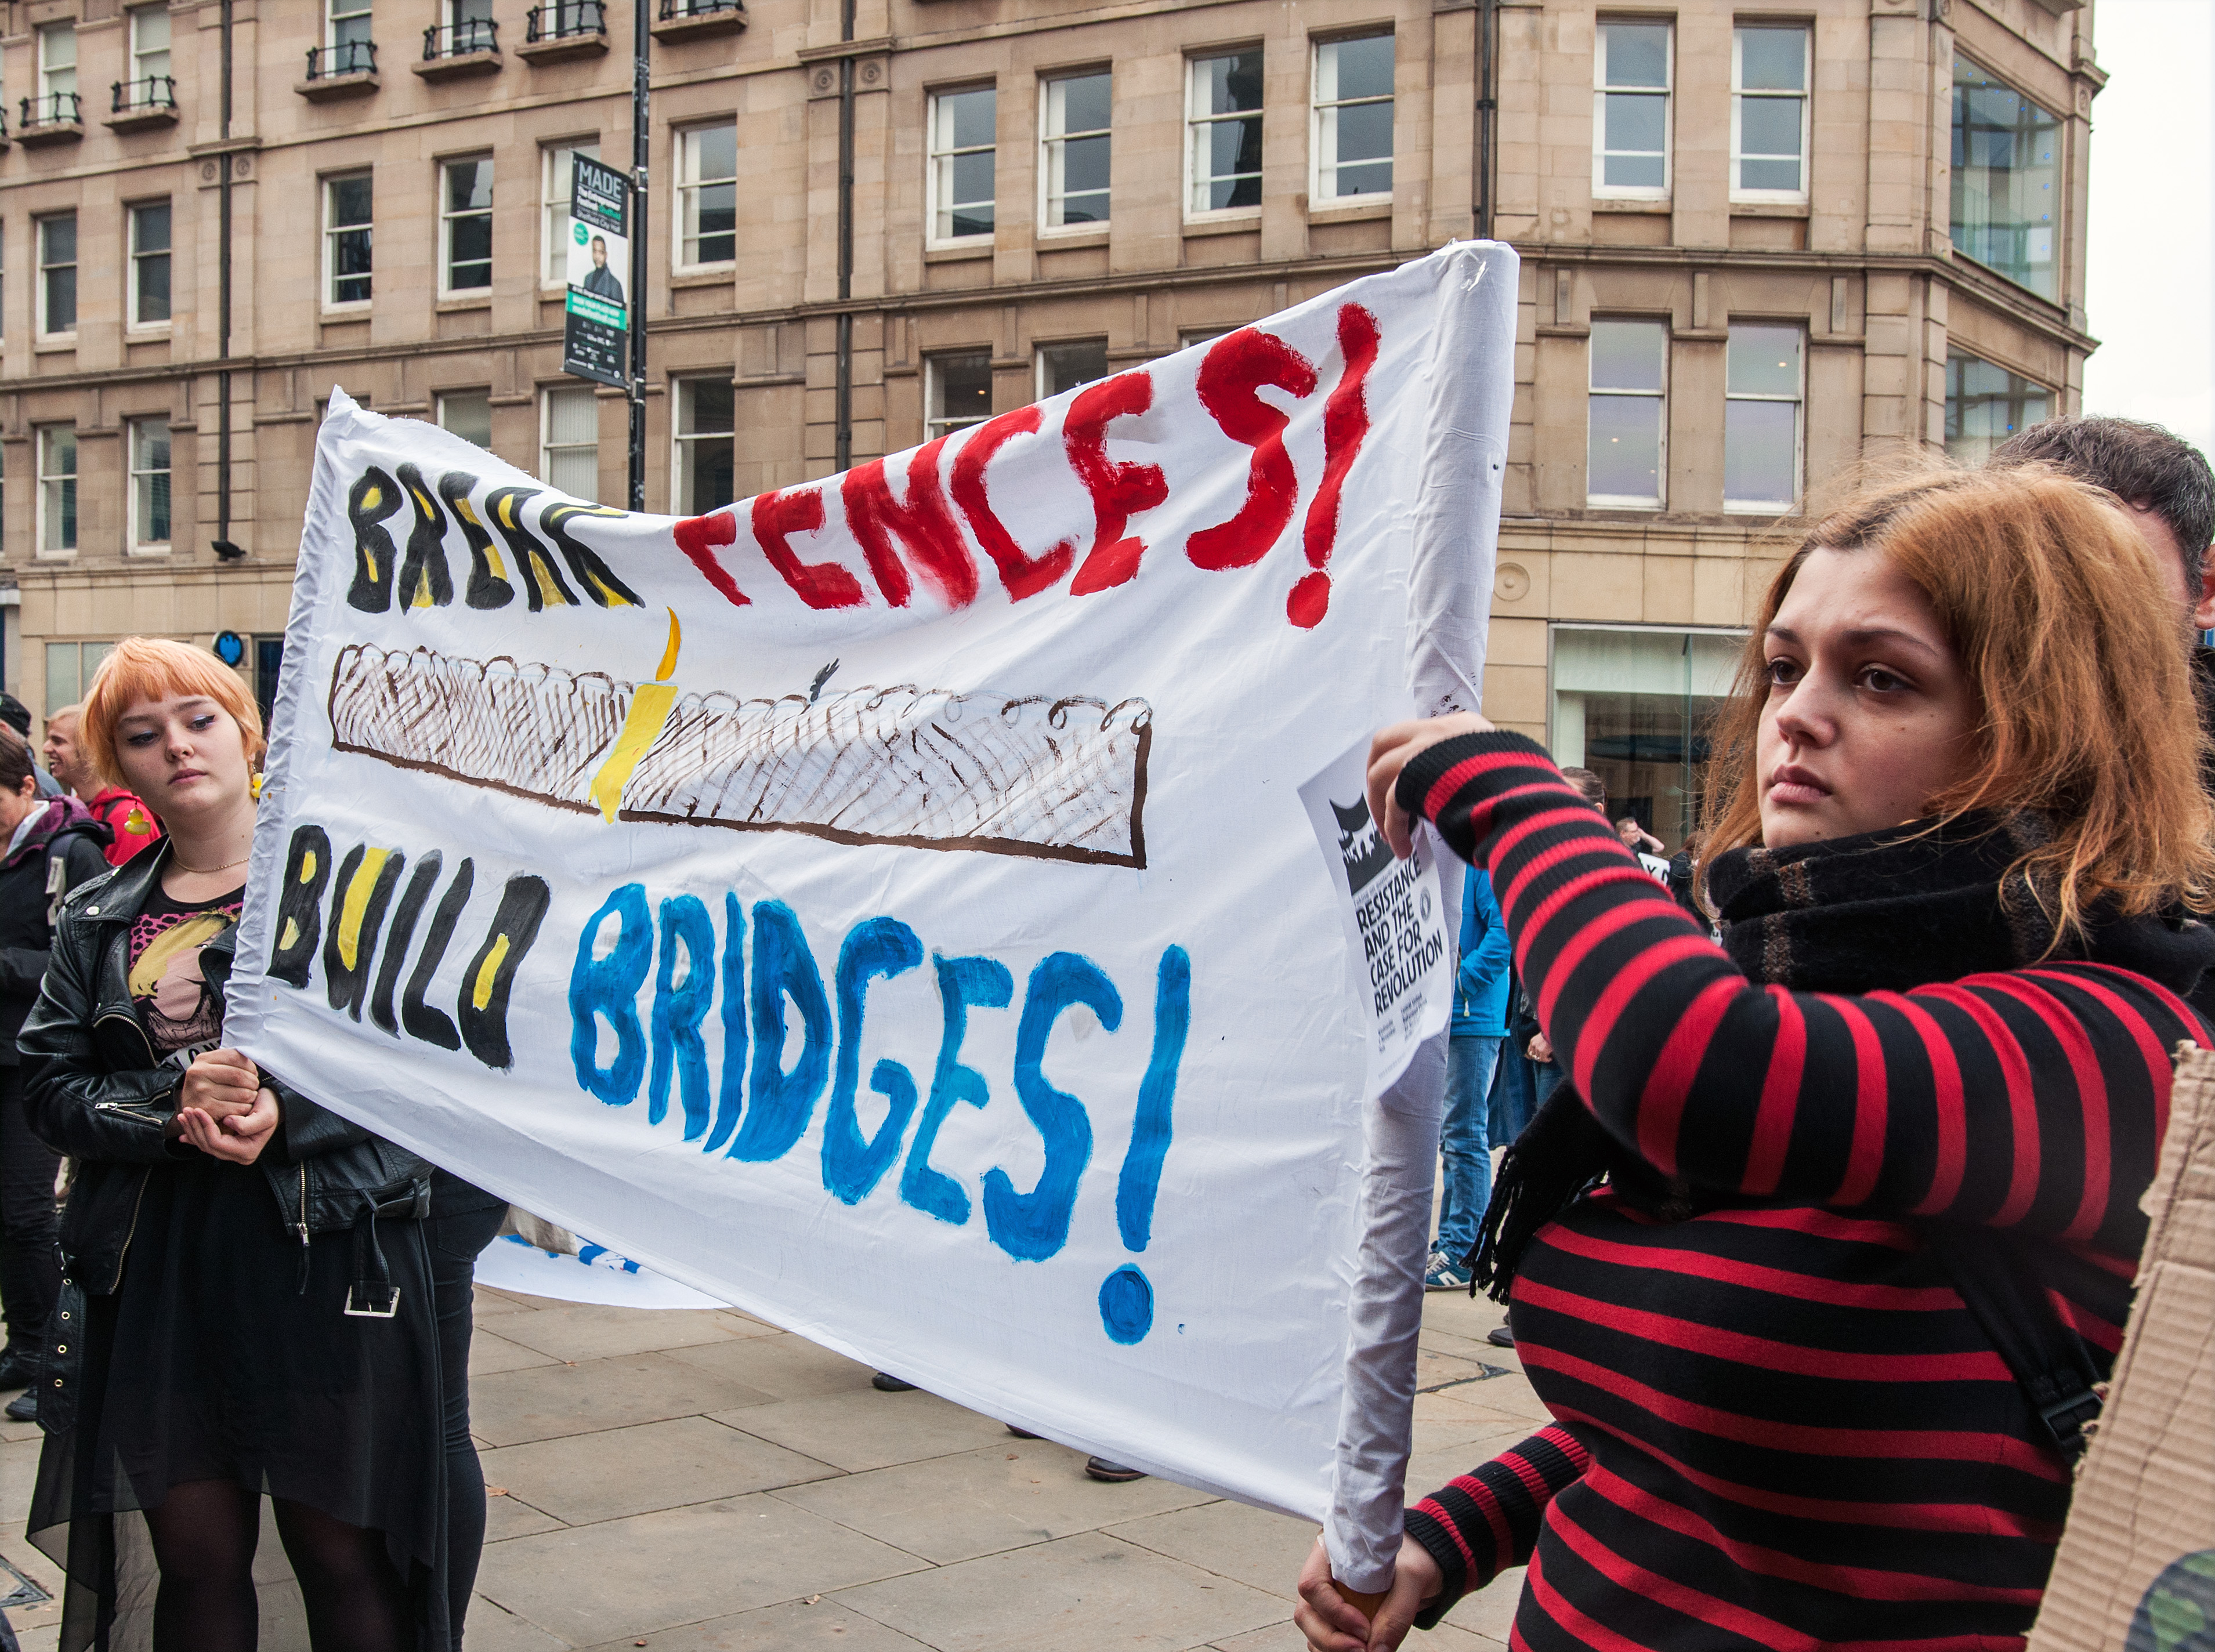 “Break fences, build bridges” Sheffield welcomes refugees